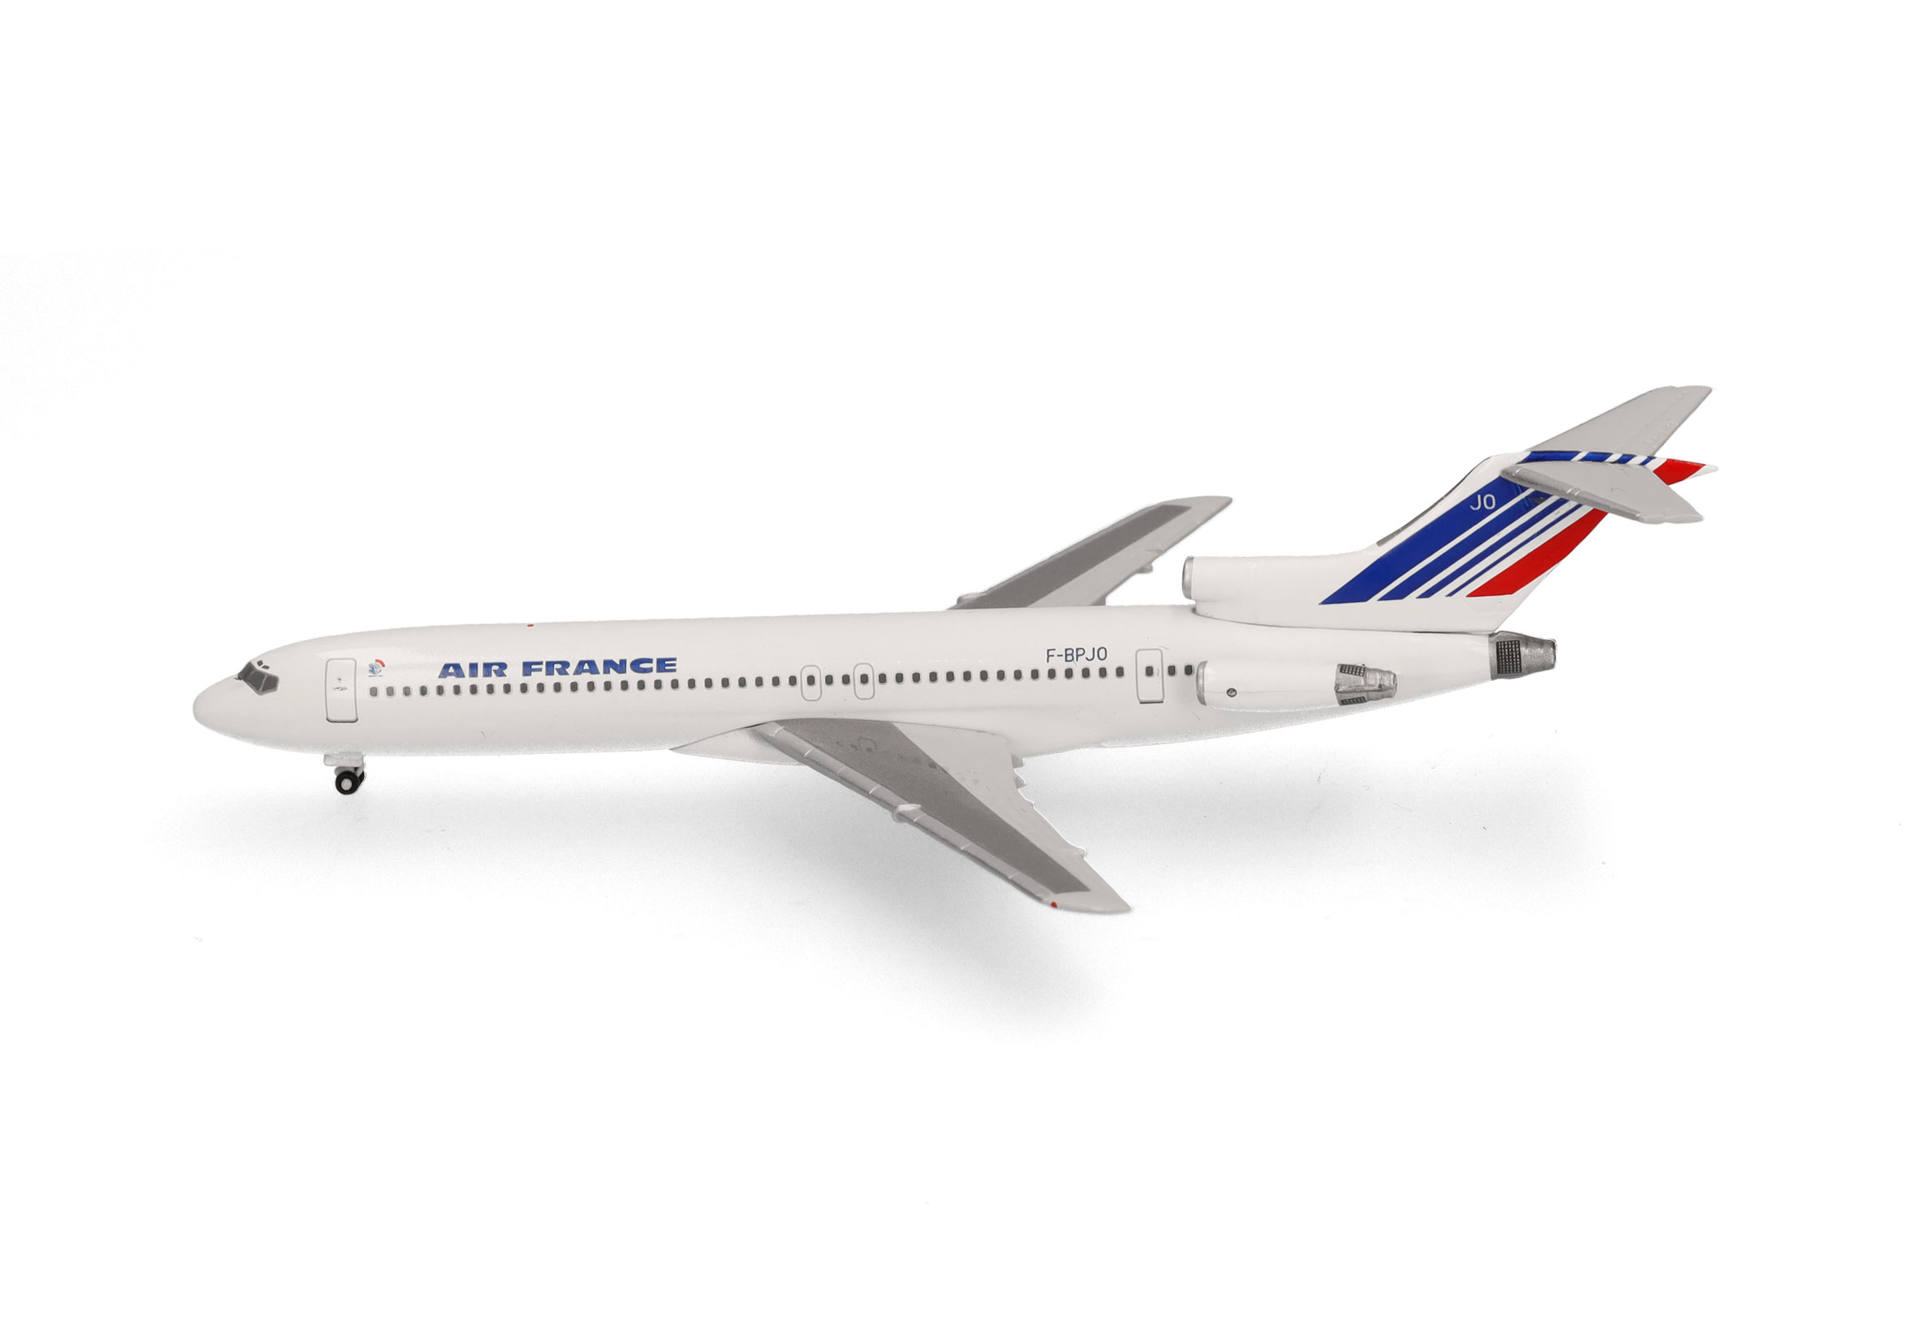 Air France Boeing 727-200 – F-BPJO